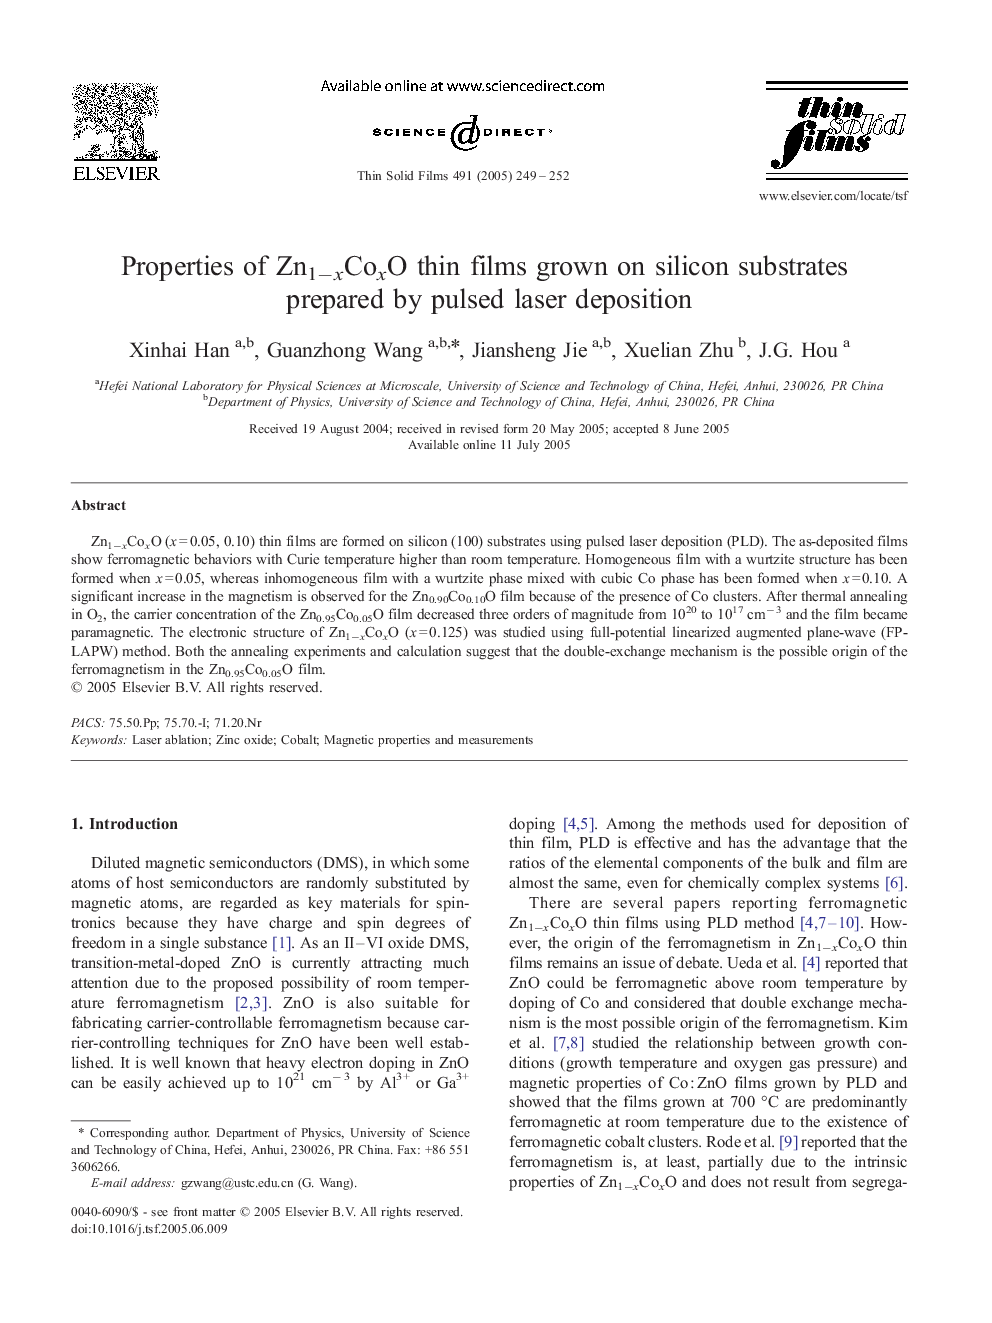 Properties of Zn1âxCoxO thin films grown on silicon substrates prepared by pulsed laser deposition